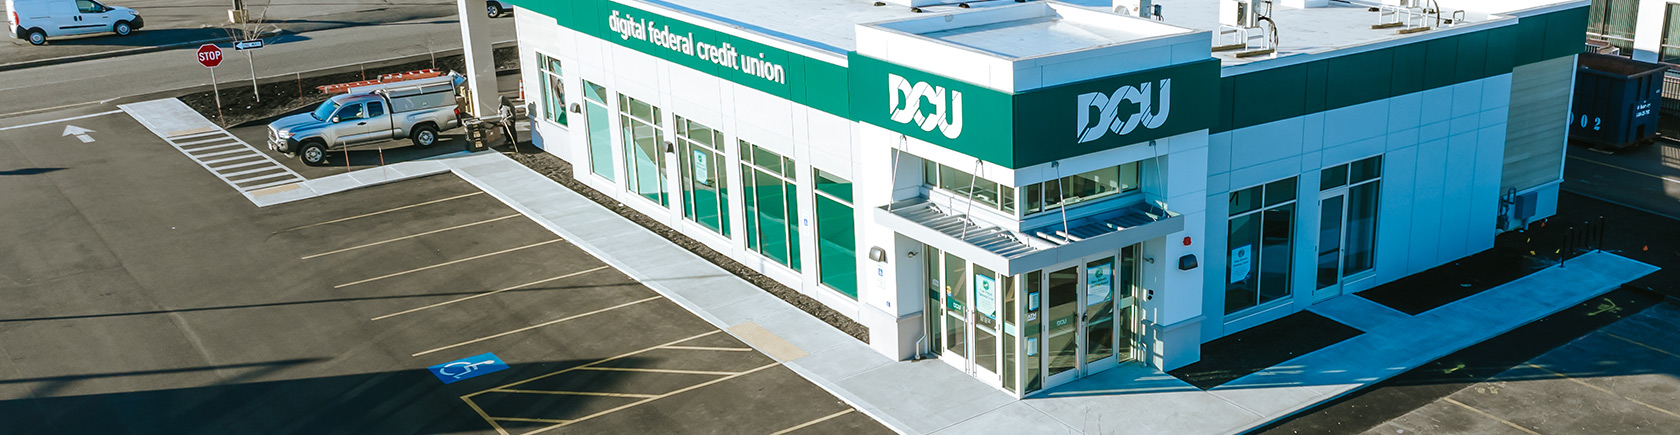 DCU Branch in Worcester, Massachusetts